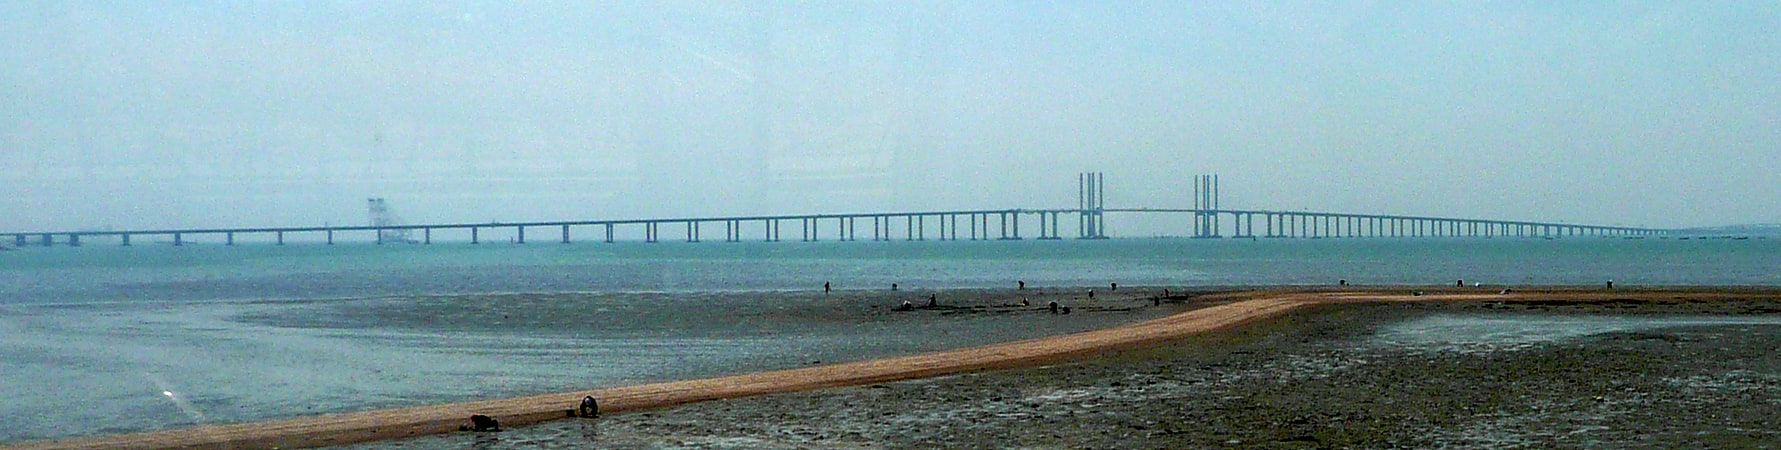 Jochbrücke in Qingdao, China